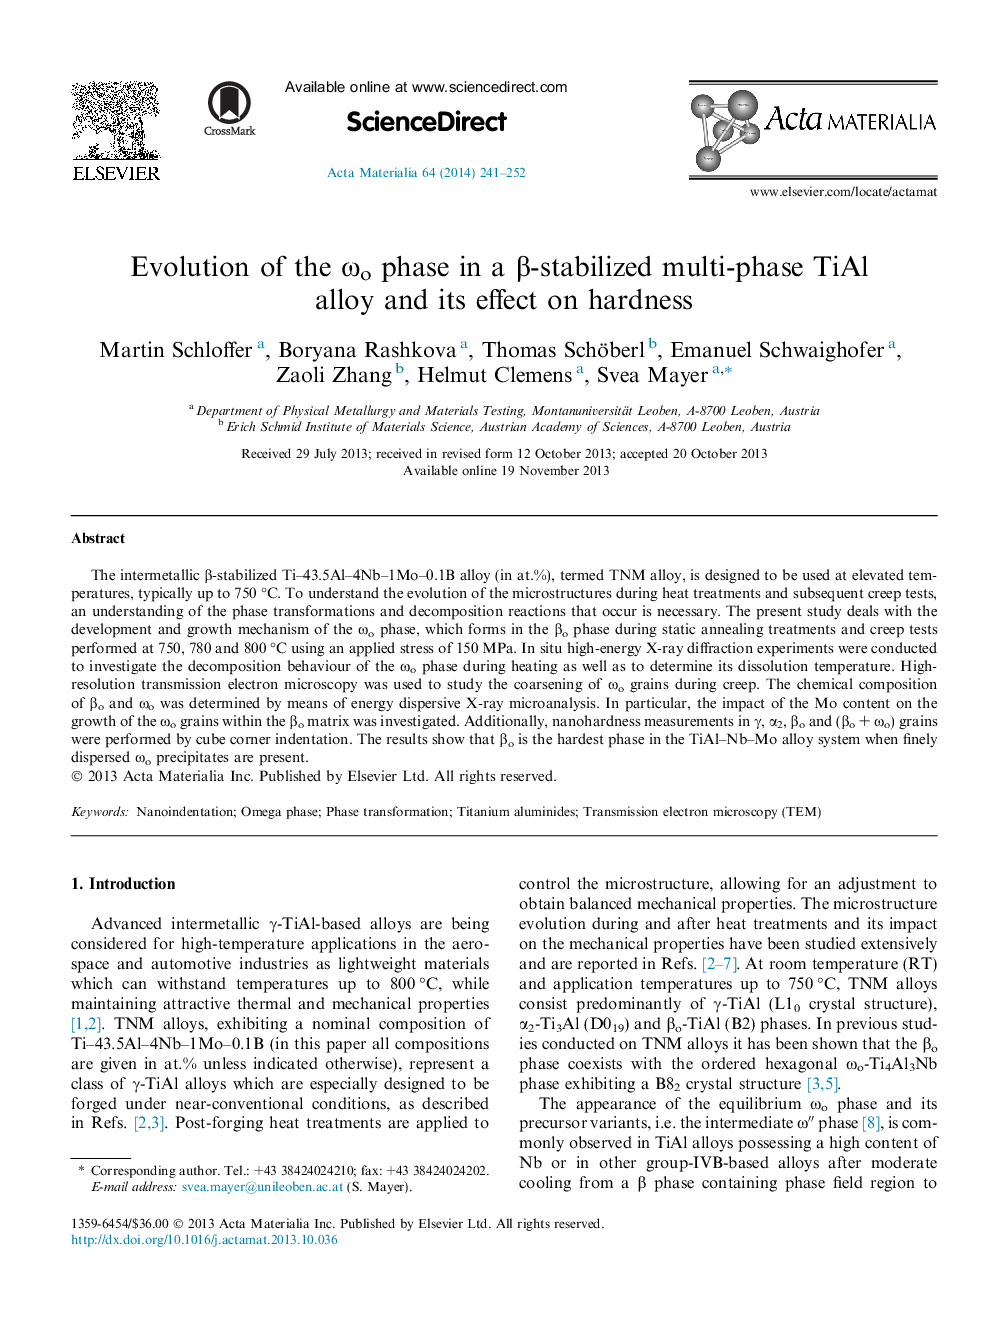 Evolution of the Ïo phase in a Î²-stabilized multi-phase TiAl alloy and its effect on hardness